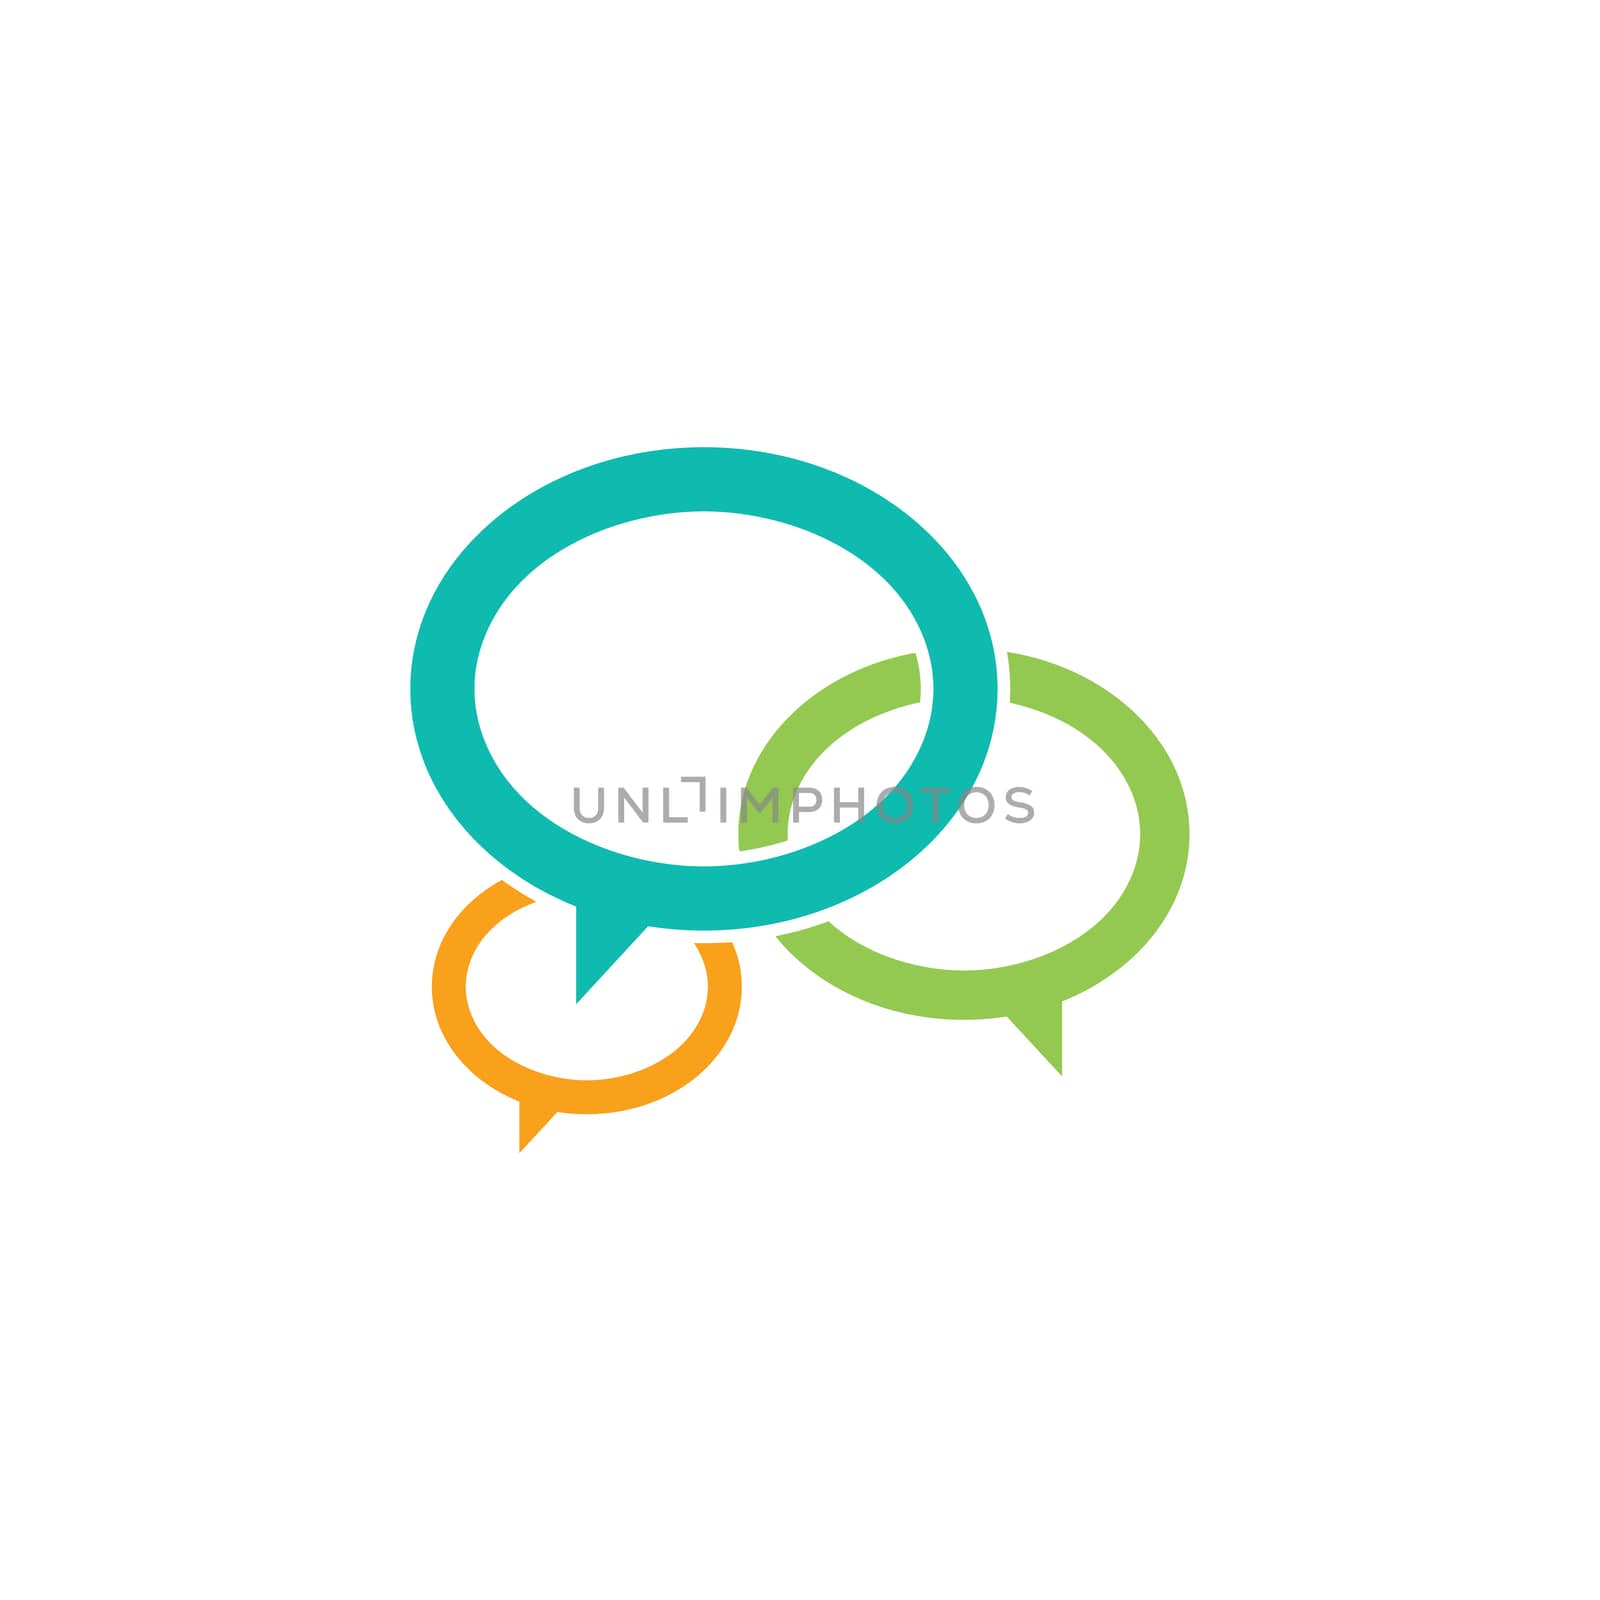 network multi chat logotype theme vector illustration